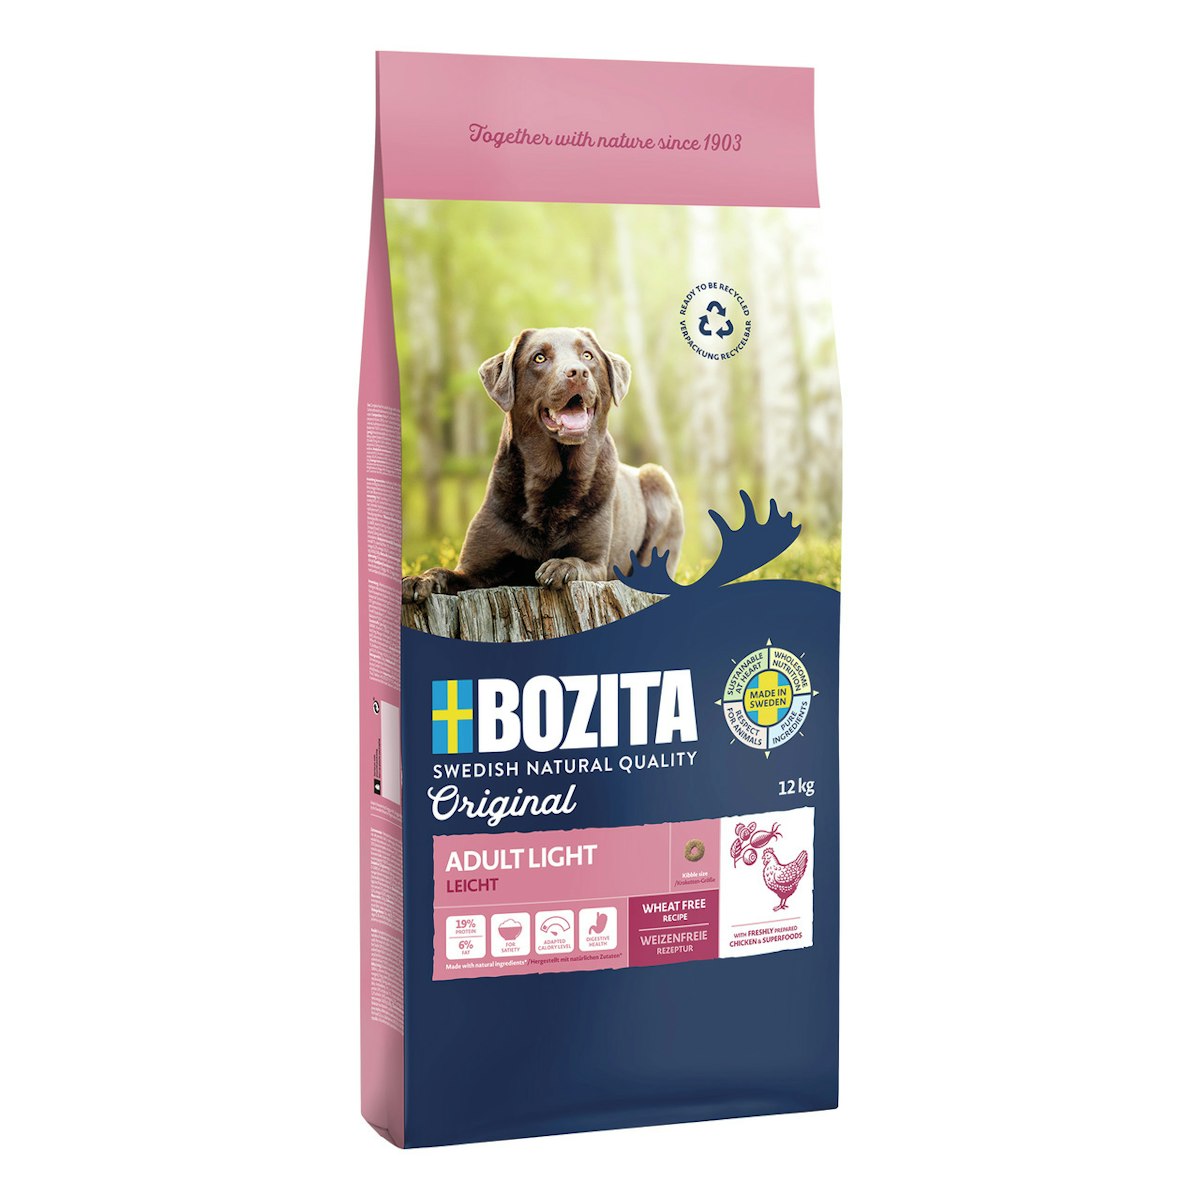 Bozita Original Adult Light 12 Kilogramm Hundetrockenfutter von Bozita